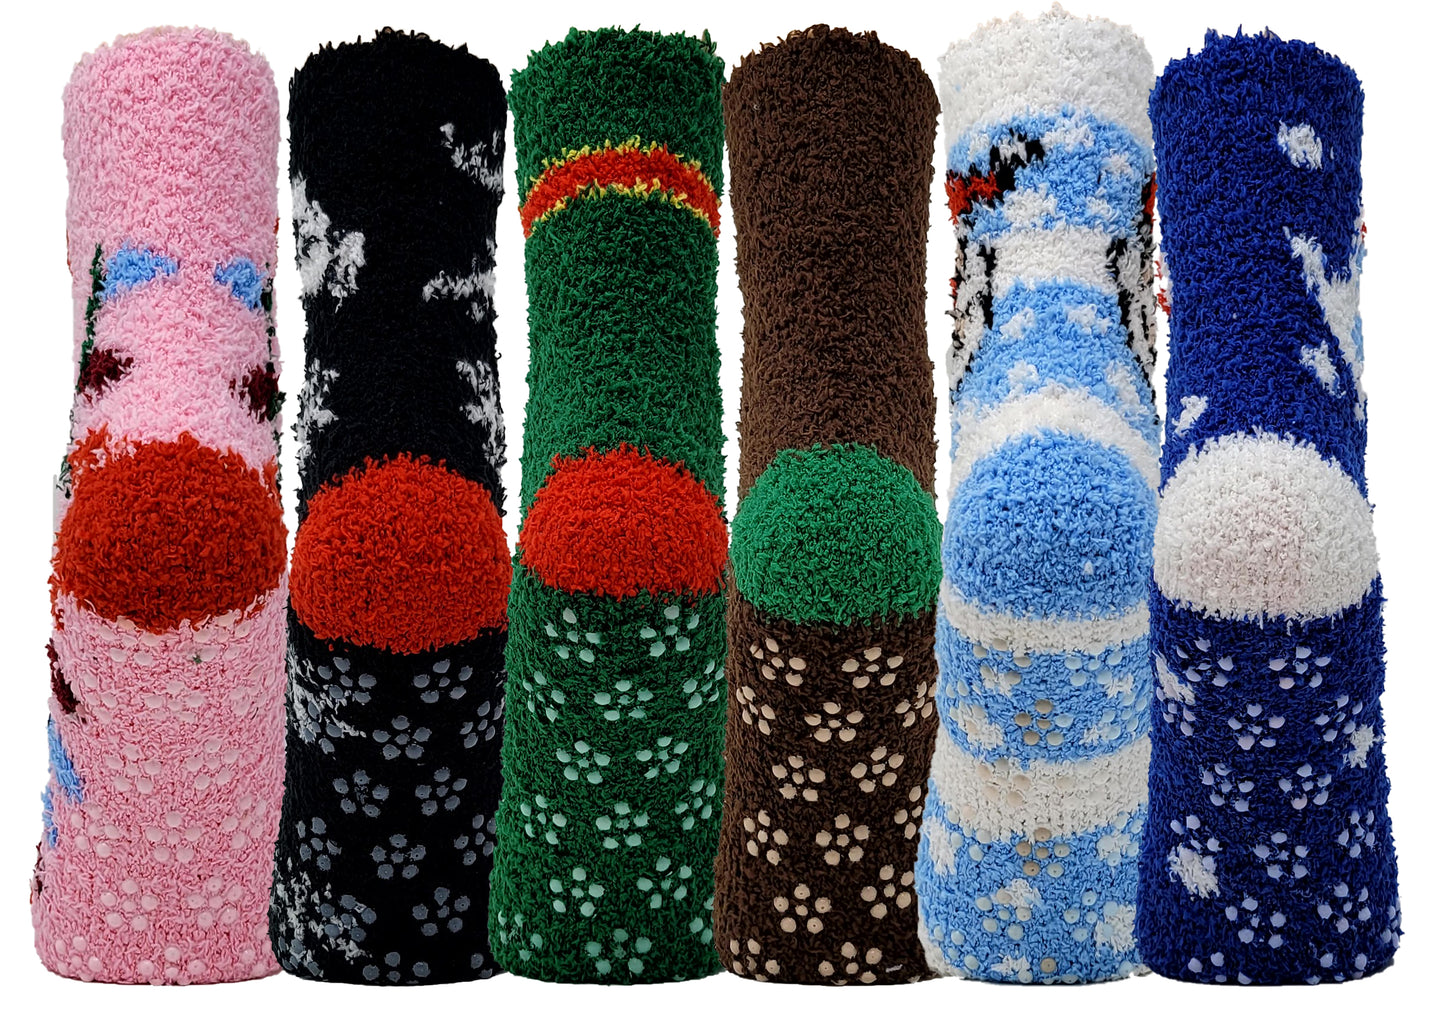 Non-Skid Home Cozy Socks | Christmas Print Super Soft Warm | Unisex (6 Pairs)